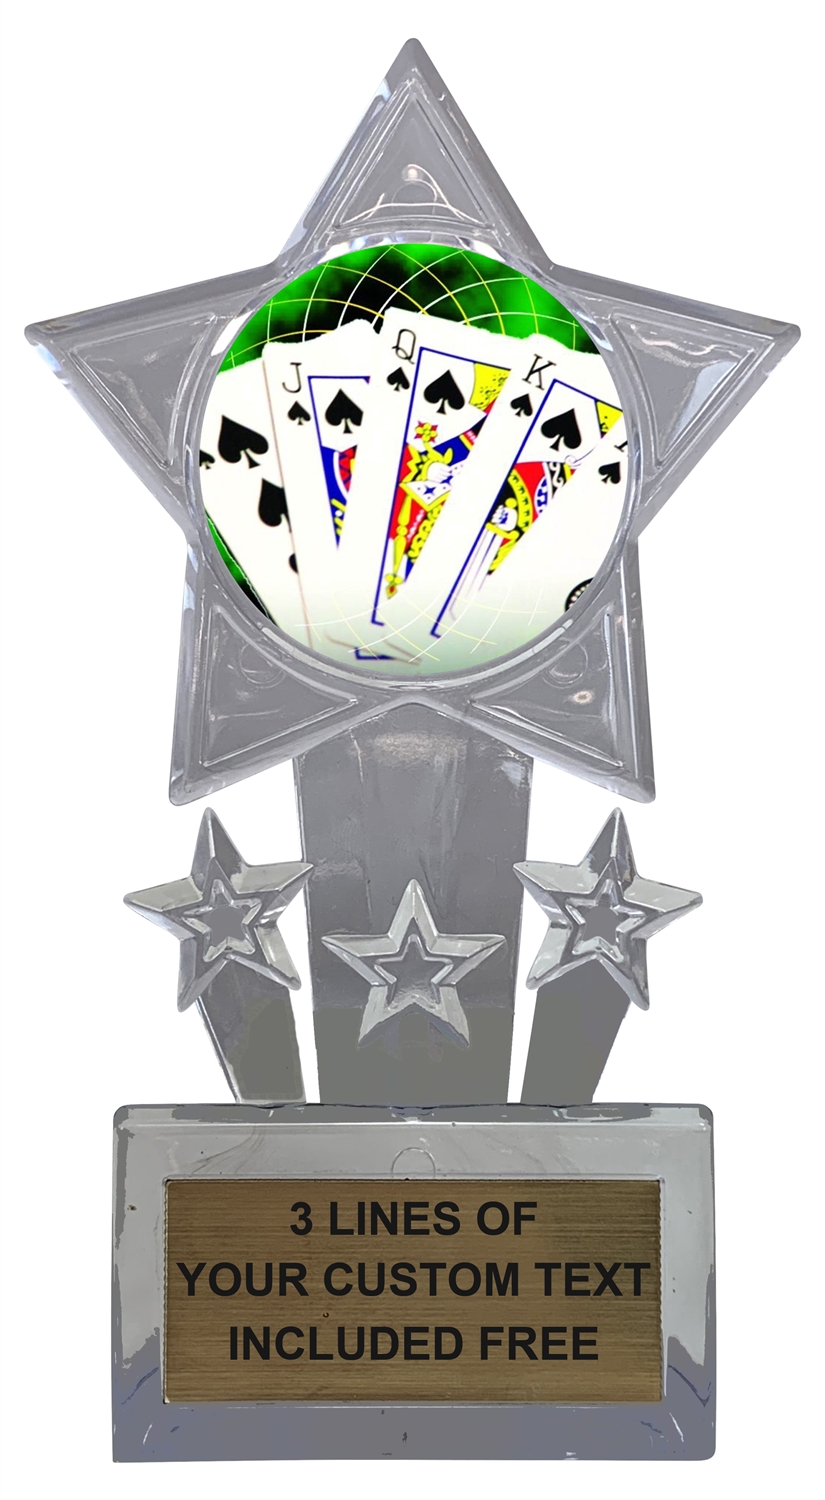 Poker Trophy Cup